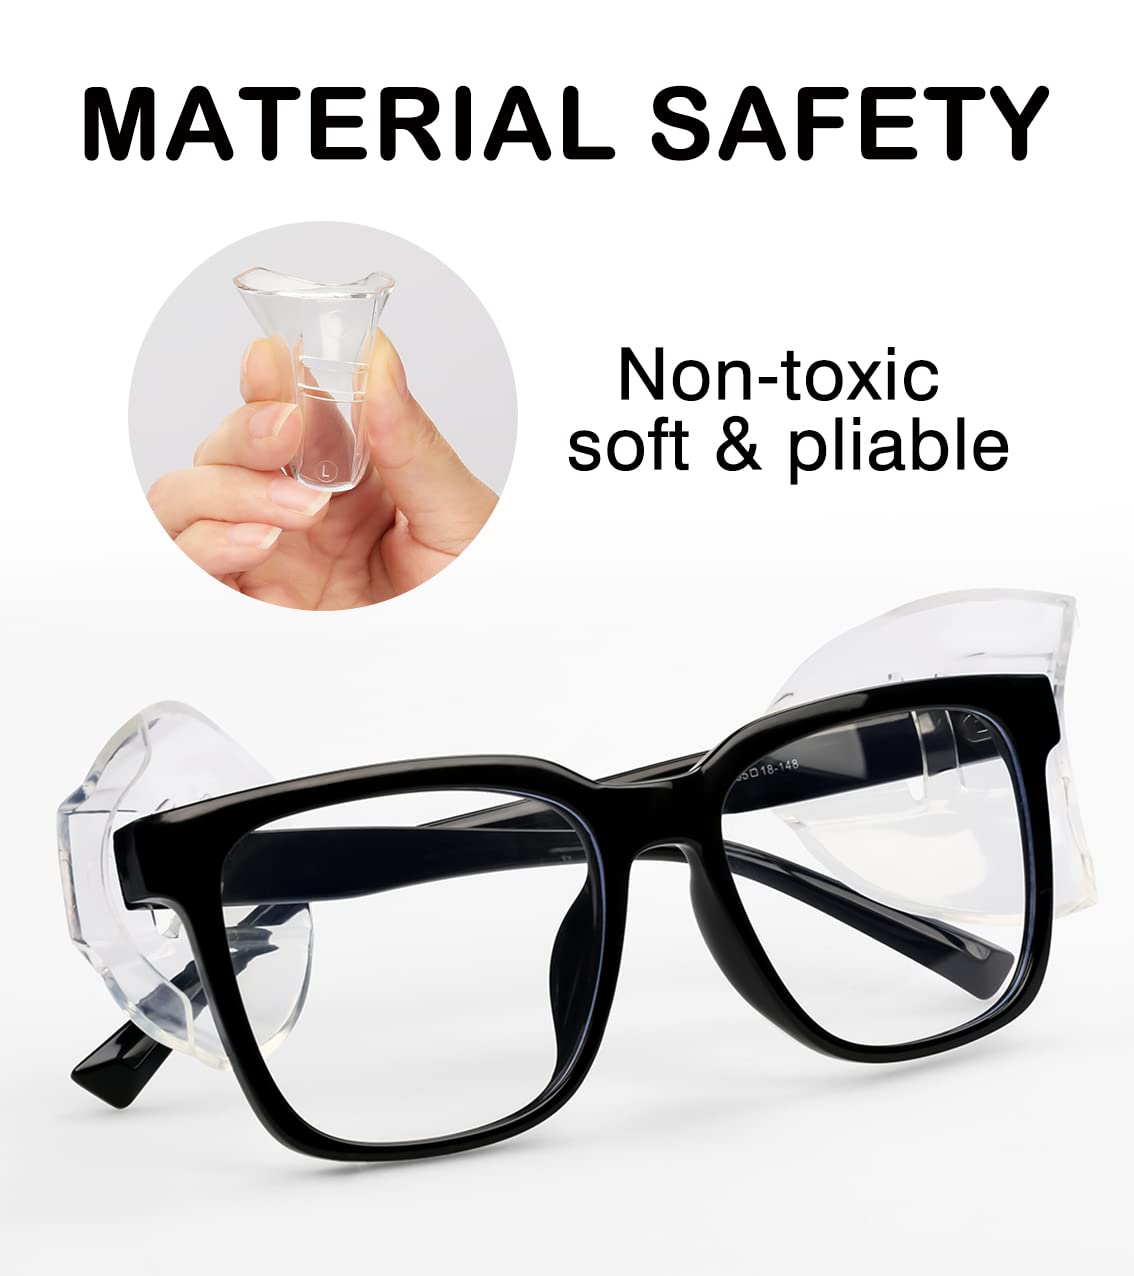 Side Shields for Prescription Glasses Side Shields for Eye Protection, Easily Slip On Side Shields Eyeglasses, Fits Most Size Glasses (2 Pairs)